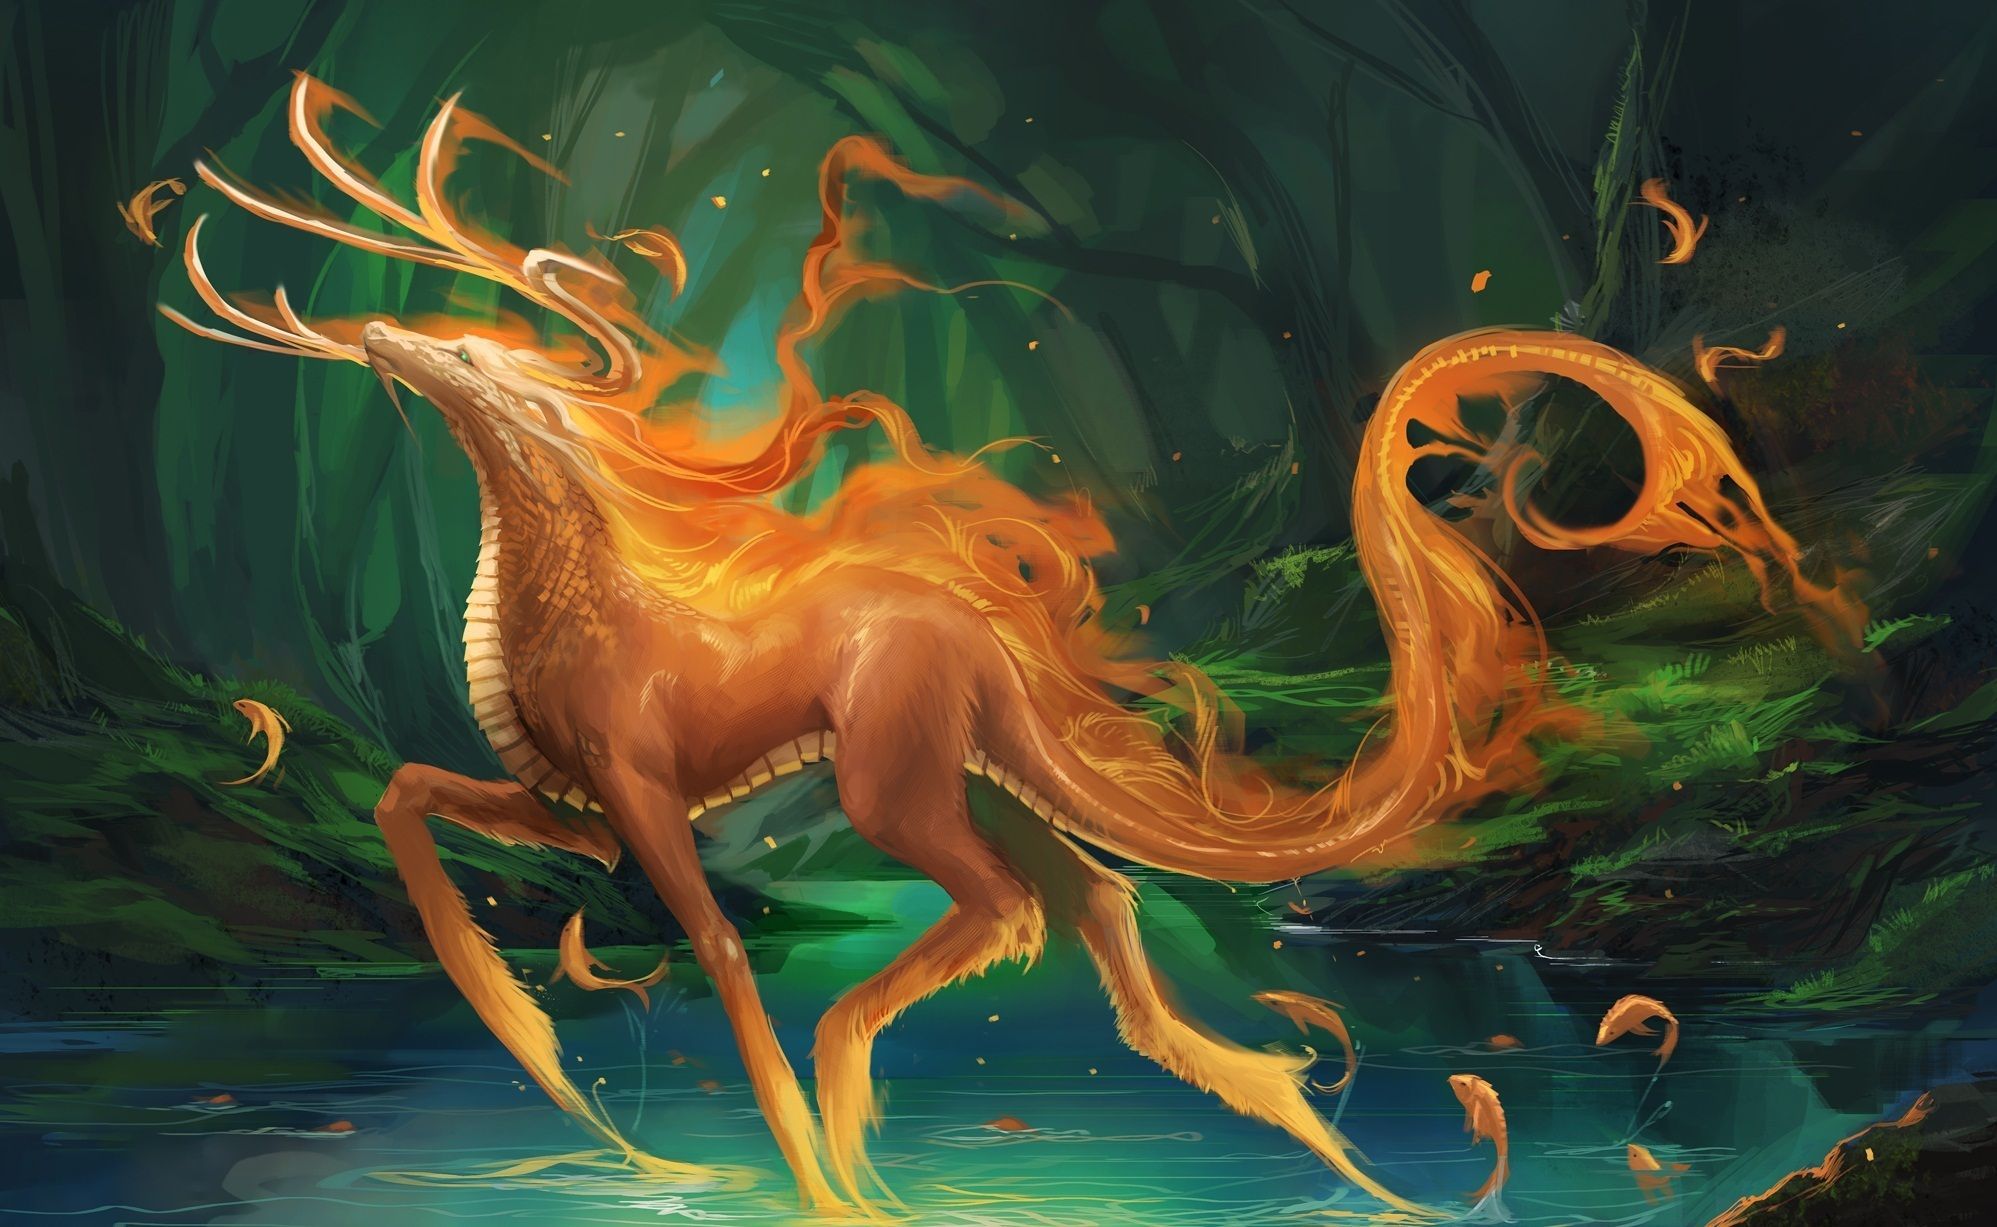 Wallpaper Magical animals Fantasy Image Download. Mythical creatures, Magical creatures, Creature art